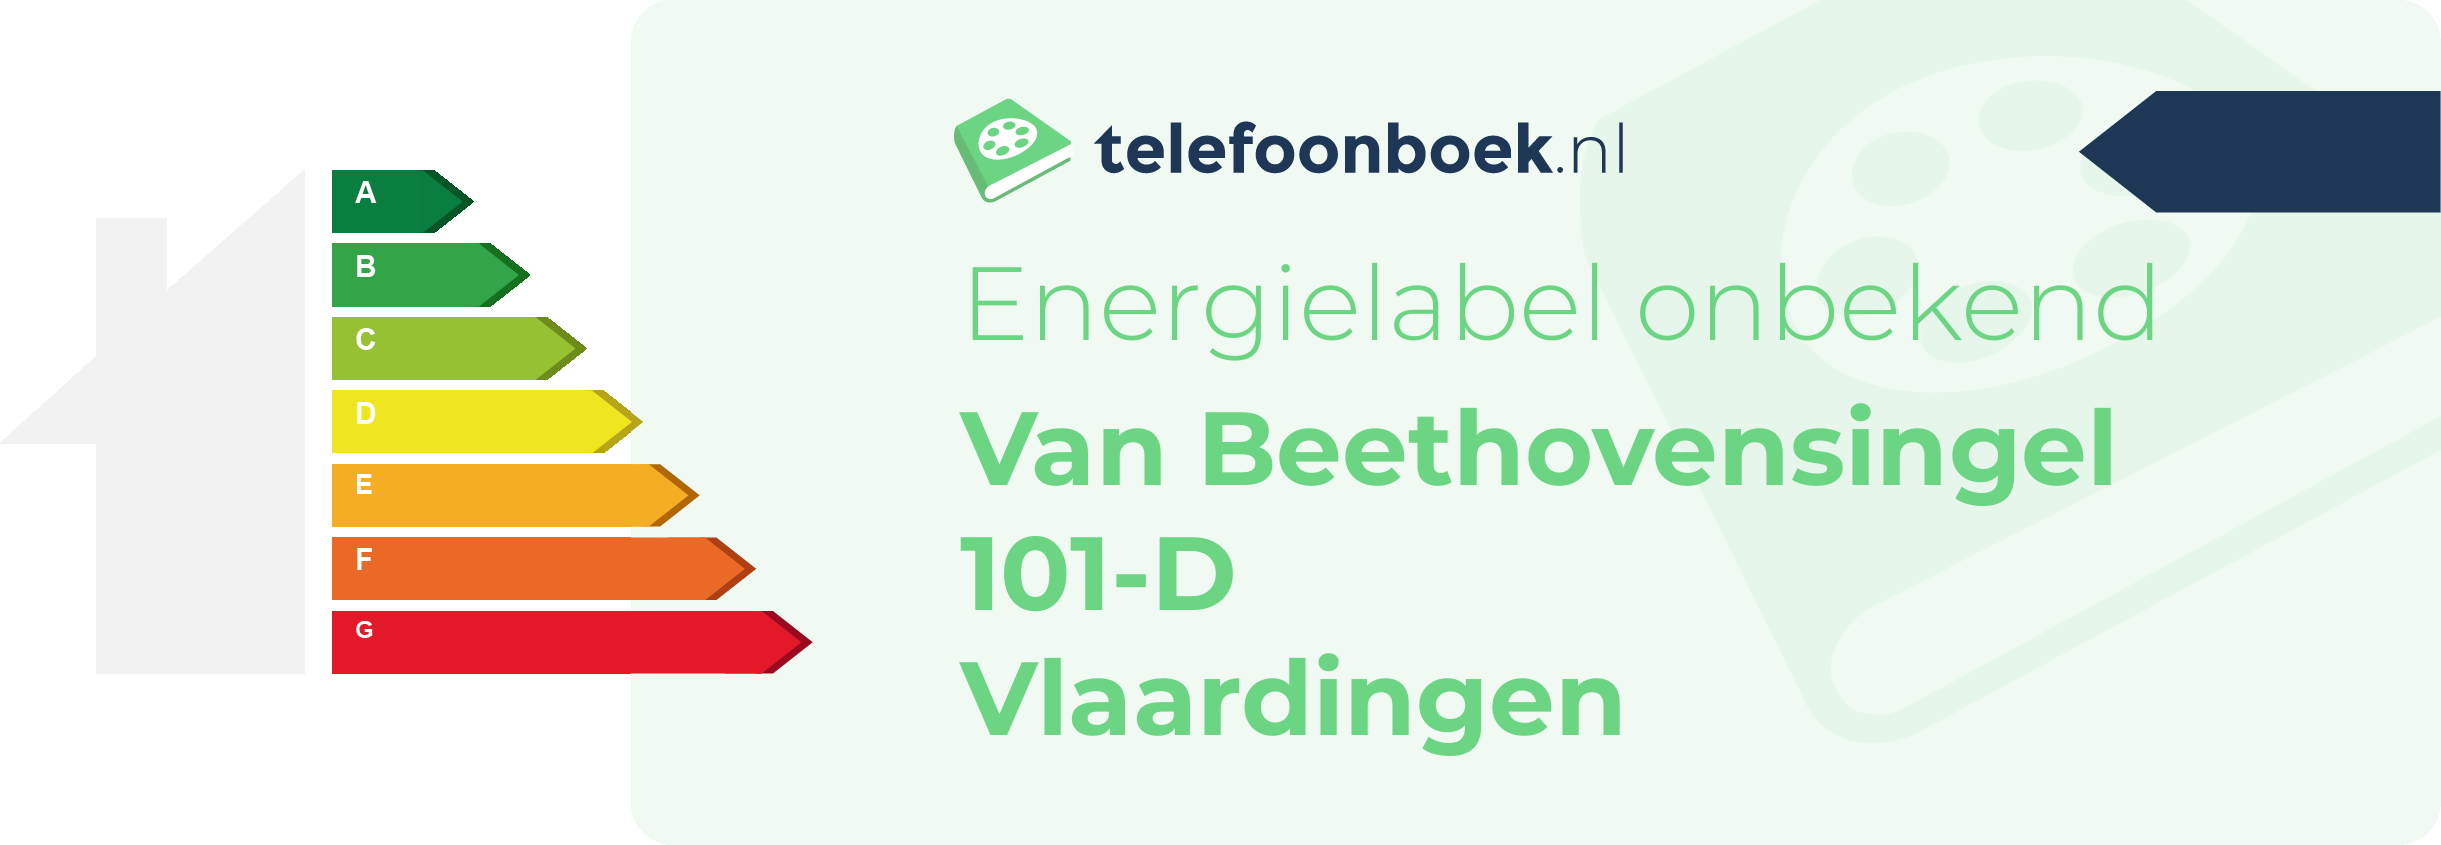 Energielabel Van Beethovensingel 101-D Vlaardingen